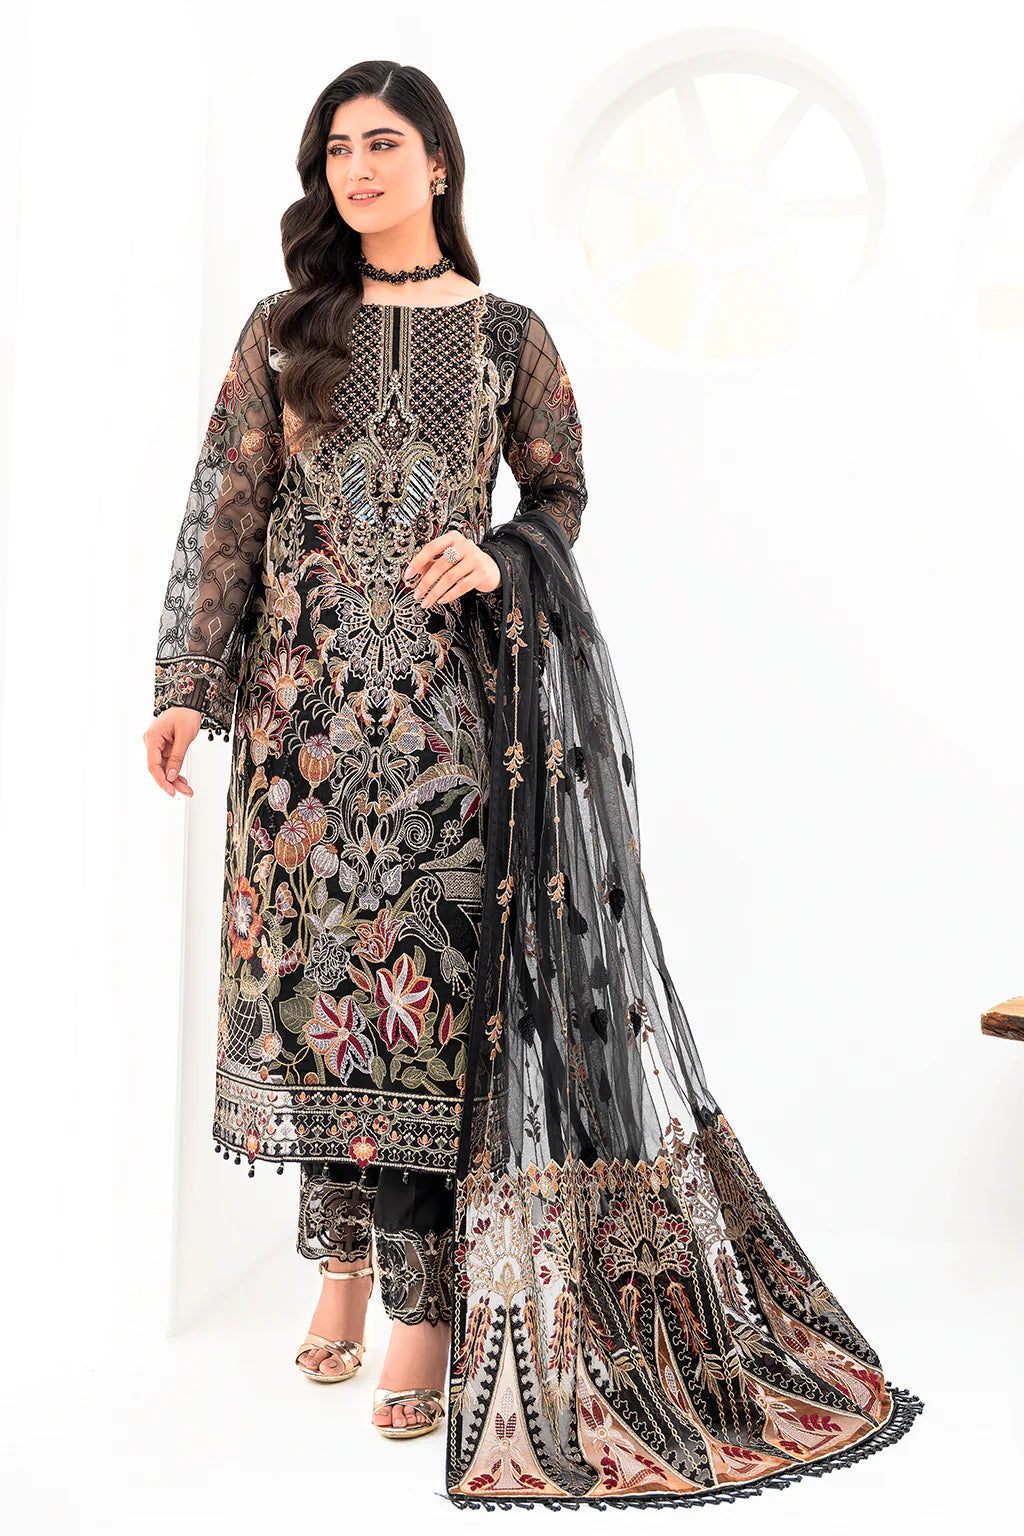  Ramsha - Pakistani clothes